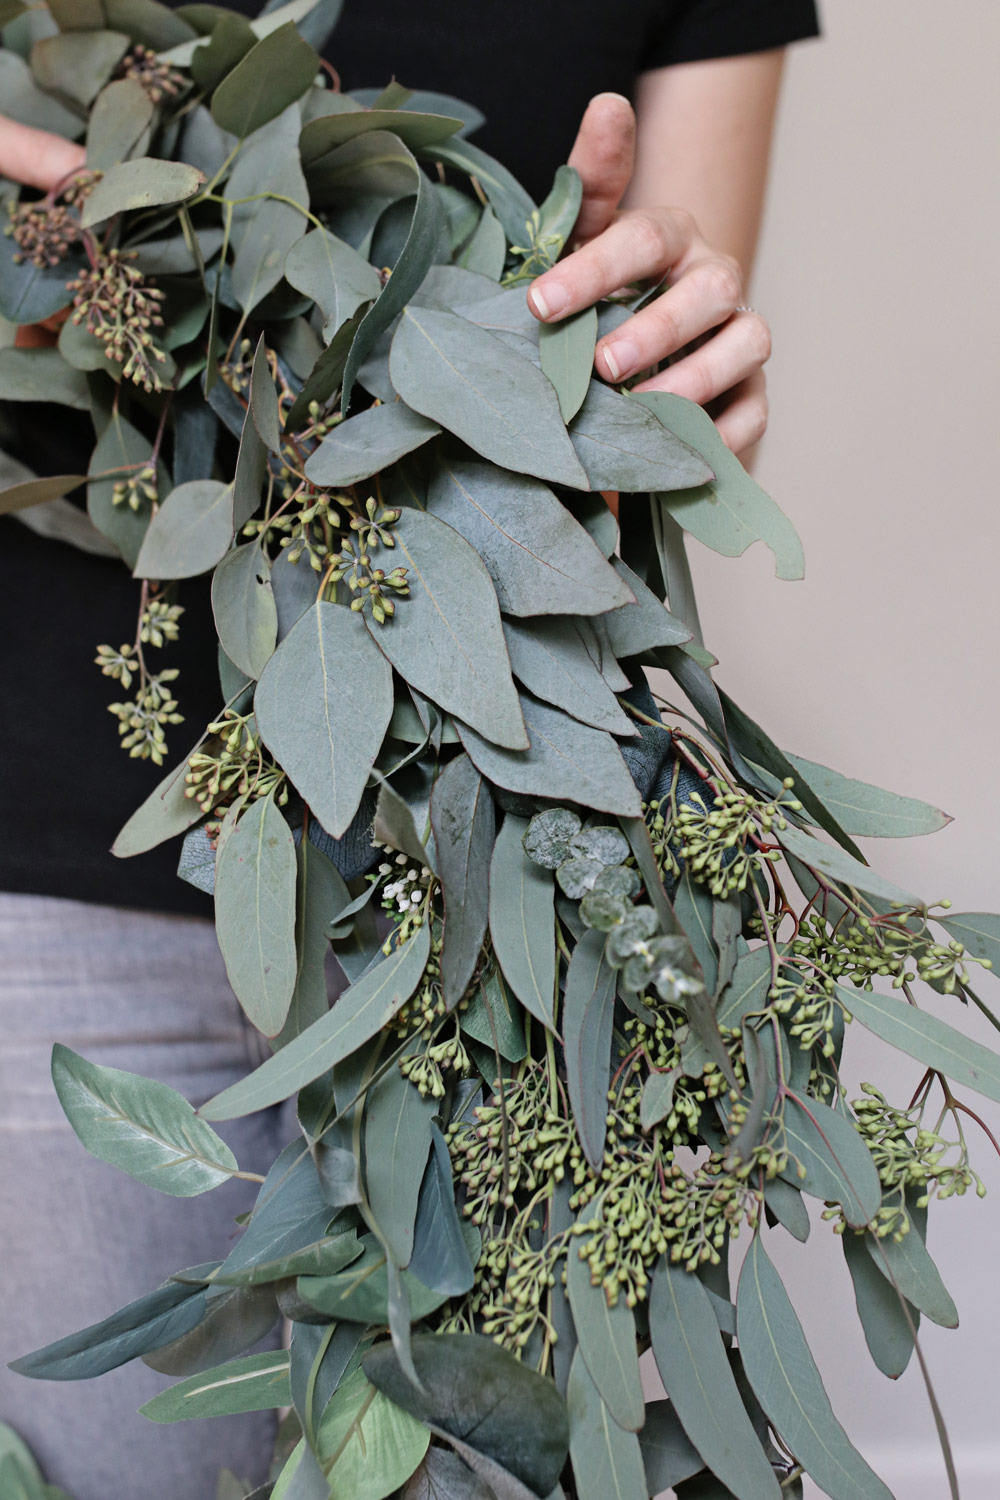 How to Make a Eucalyptus Wreath